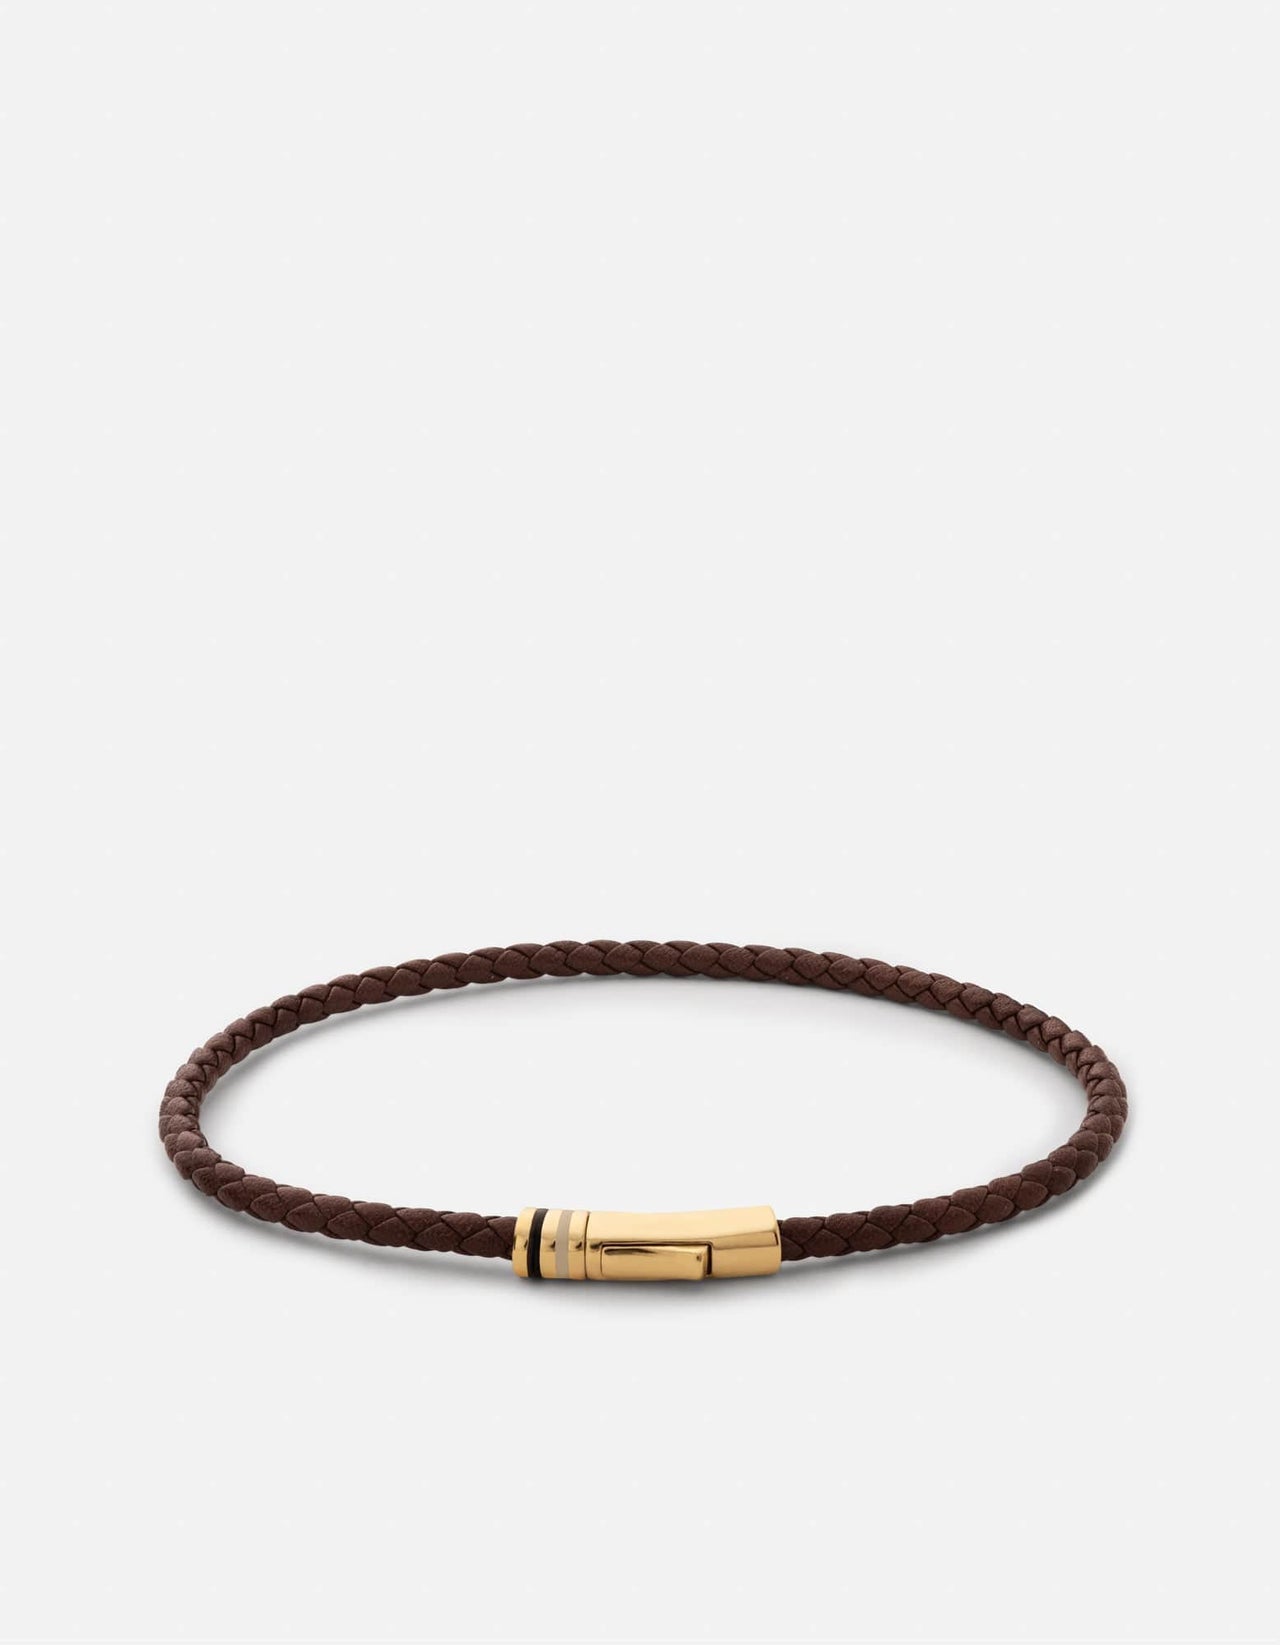 Juno Leather Bracelet, Gold Vermeil | Men's Bracelets | Miansai